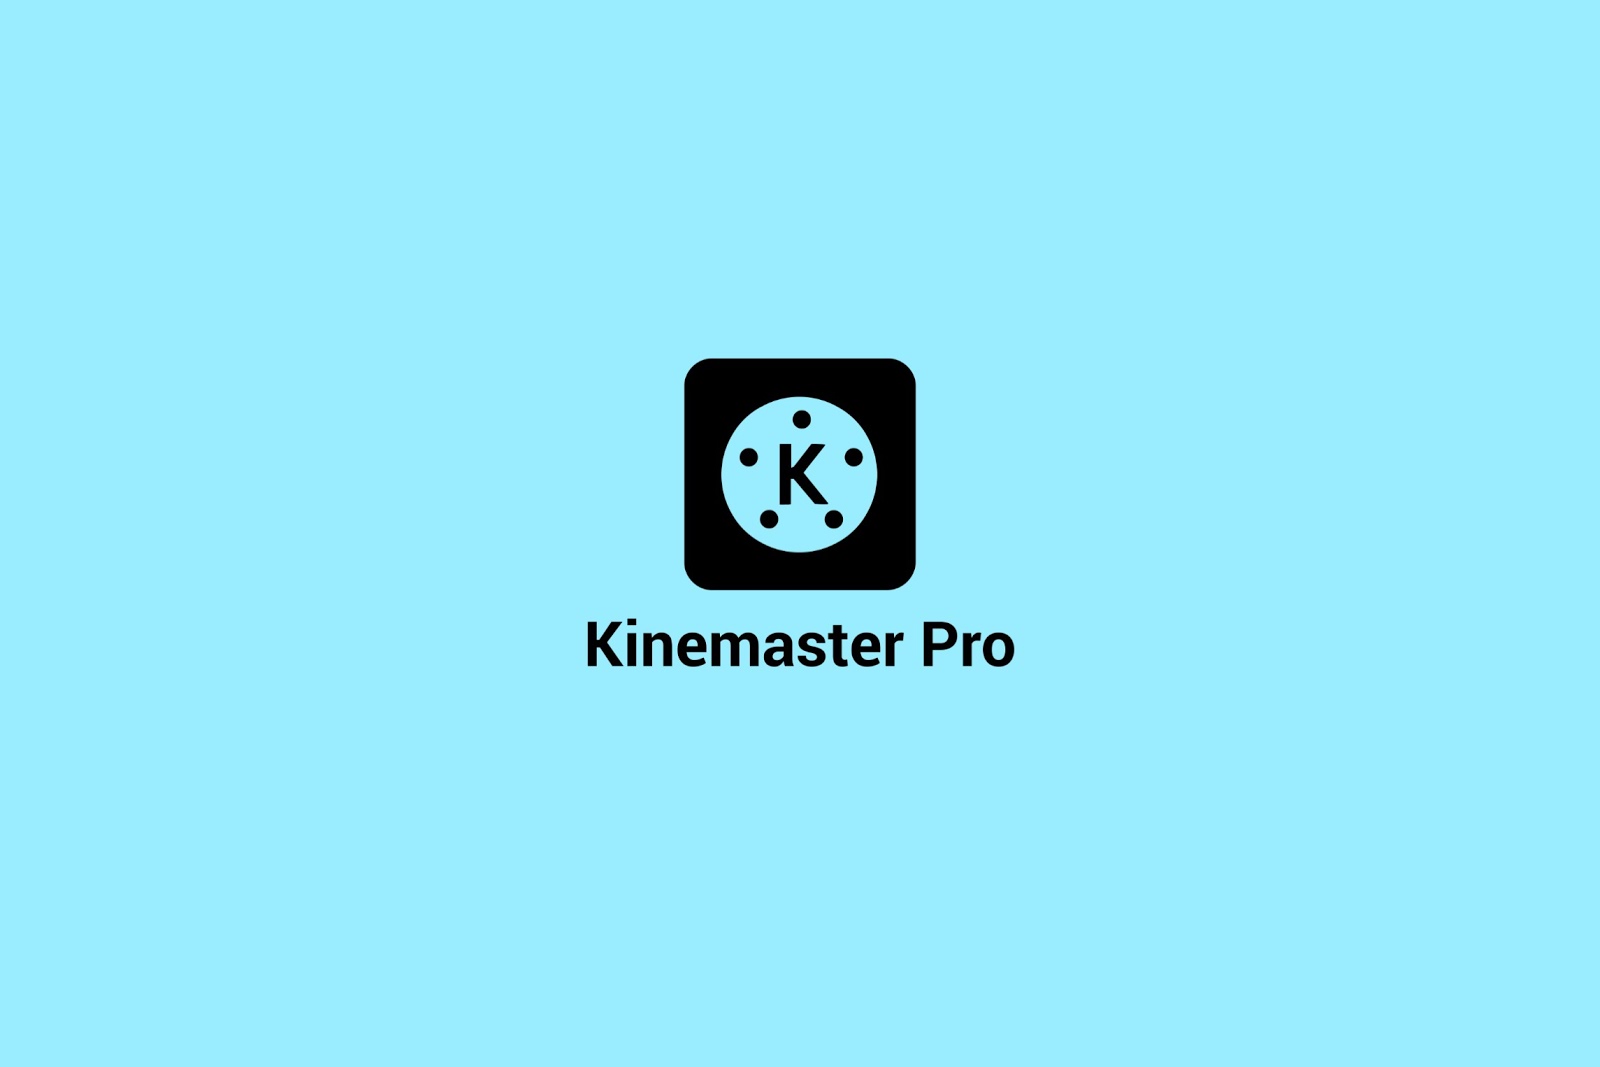 KineMaster Pro Full MOD Versi Terbaru 2020